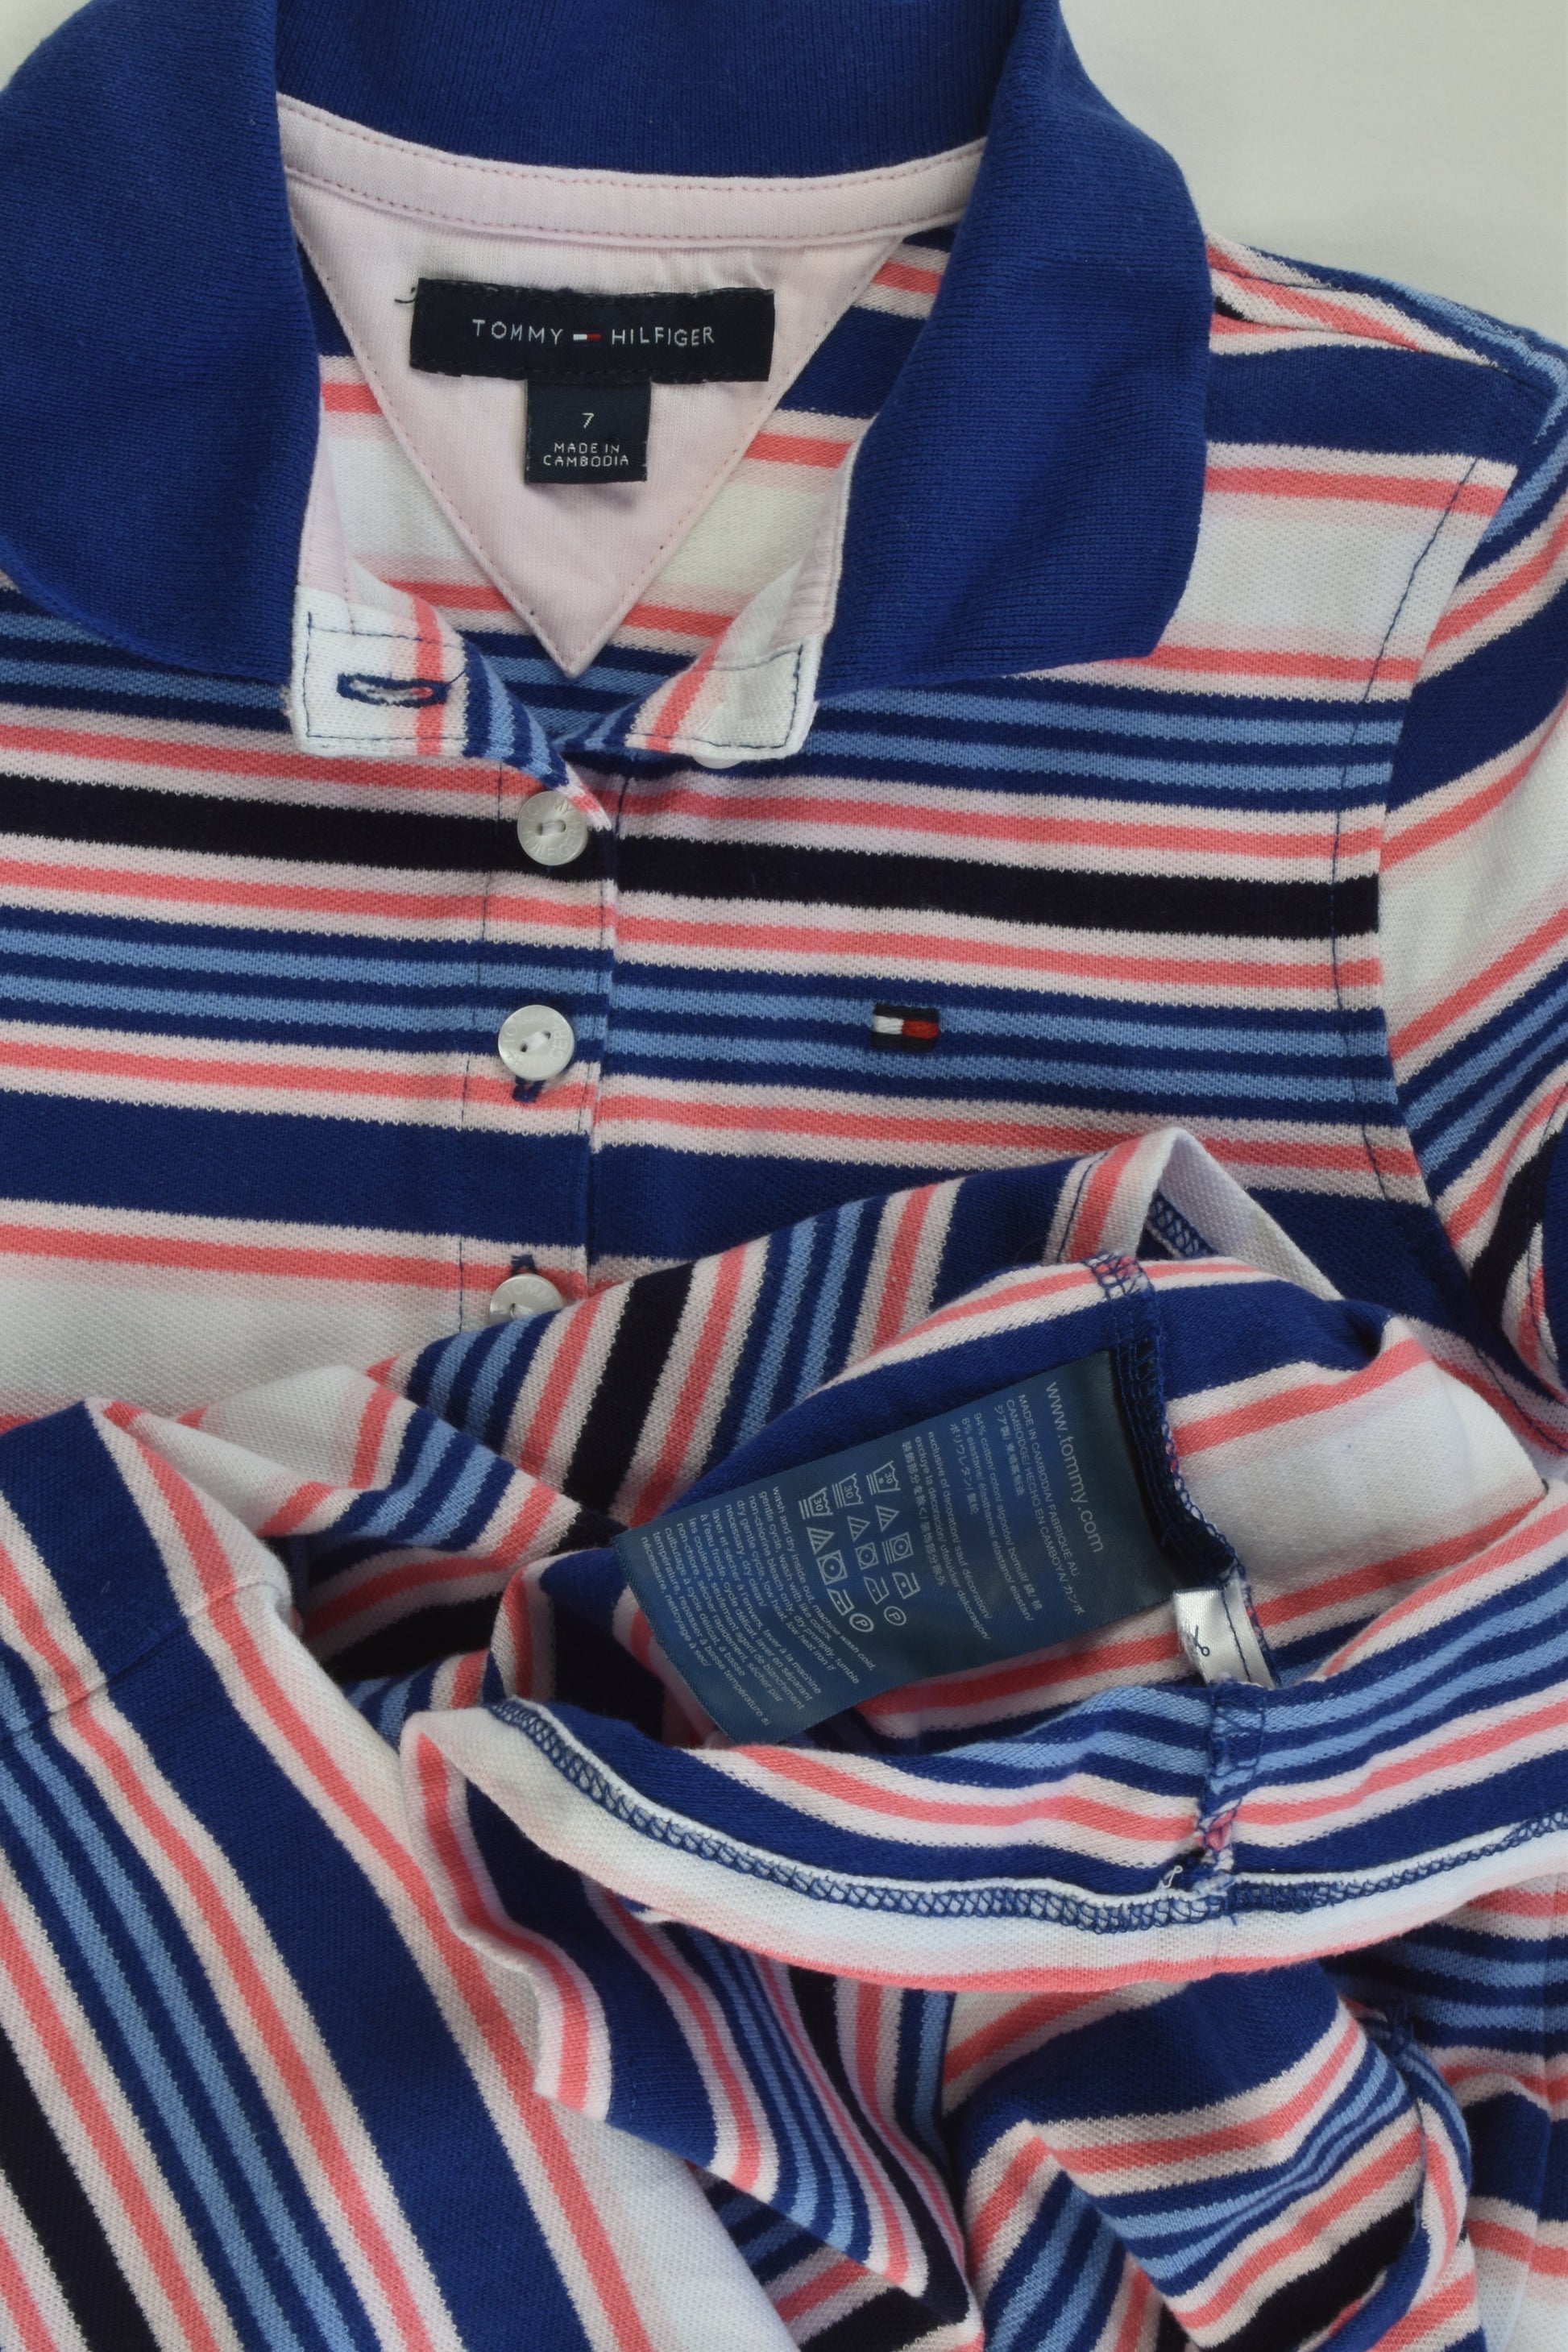 Tommy Hilfiger Size 7 Striped Polo Dress